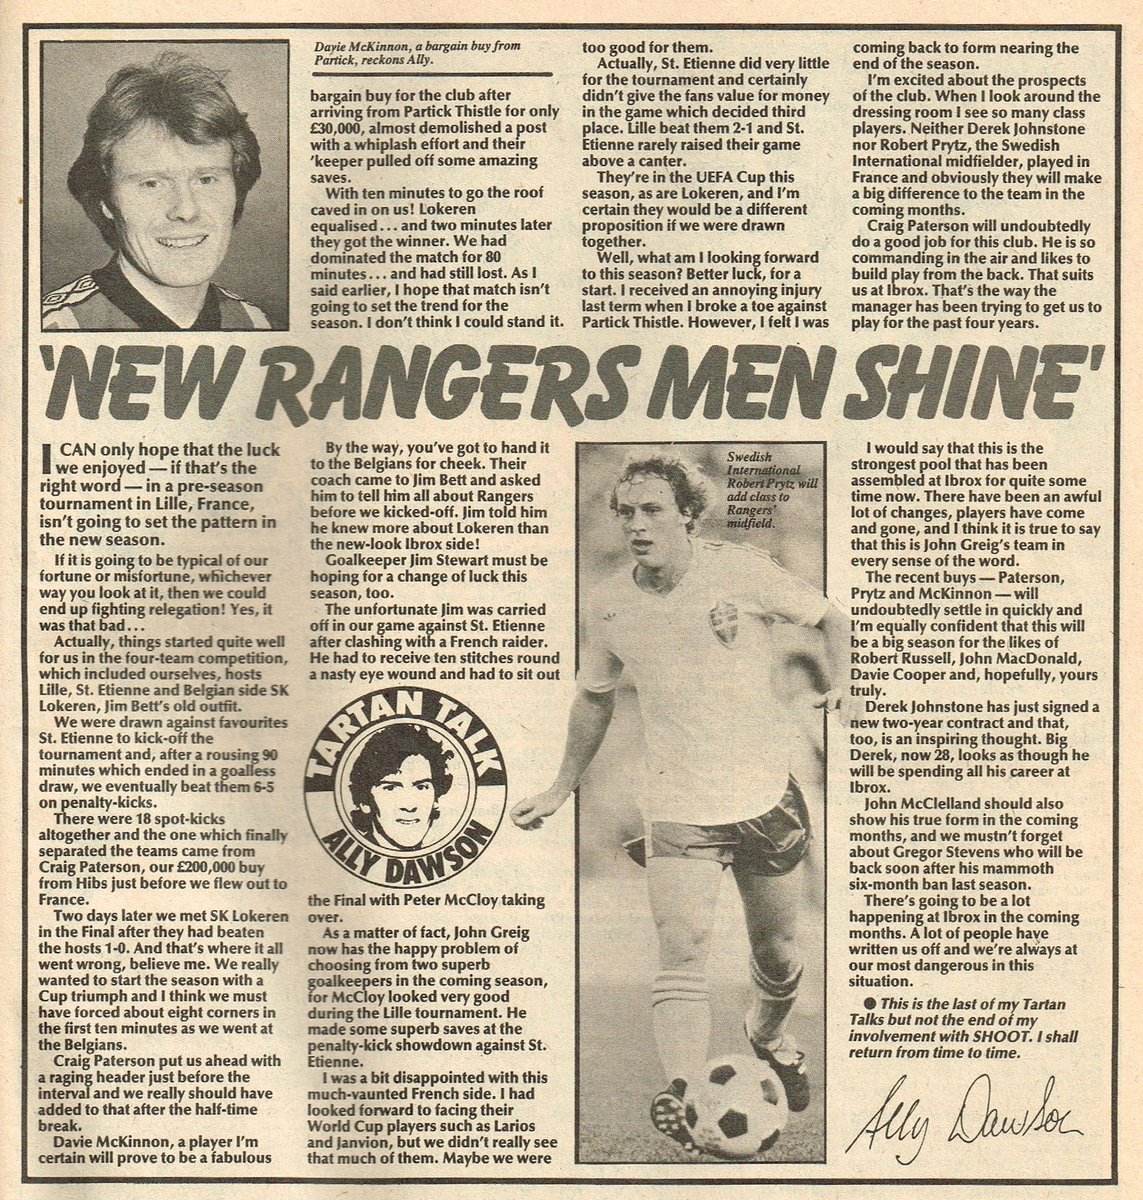 'New #Rangers men shine' #TartanTalk #AllyDawson #DaveMackinnon #Shoot! 1982-08-21